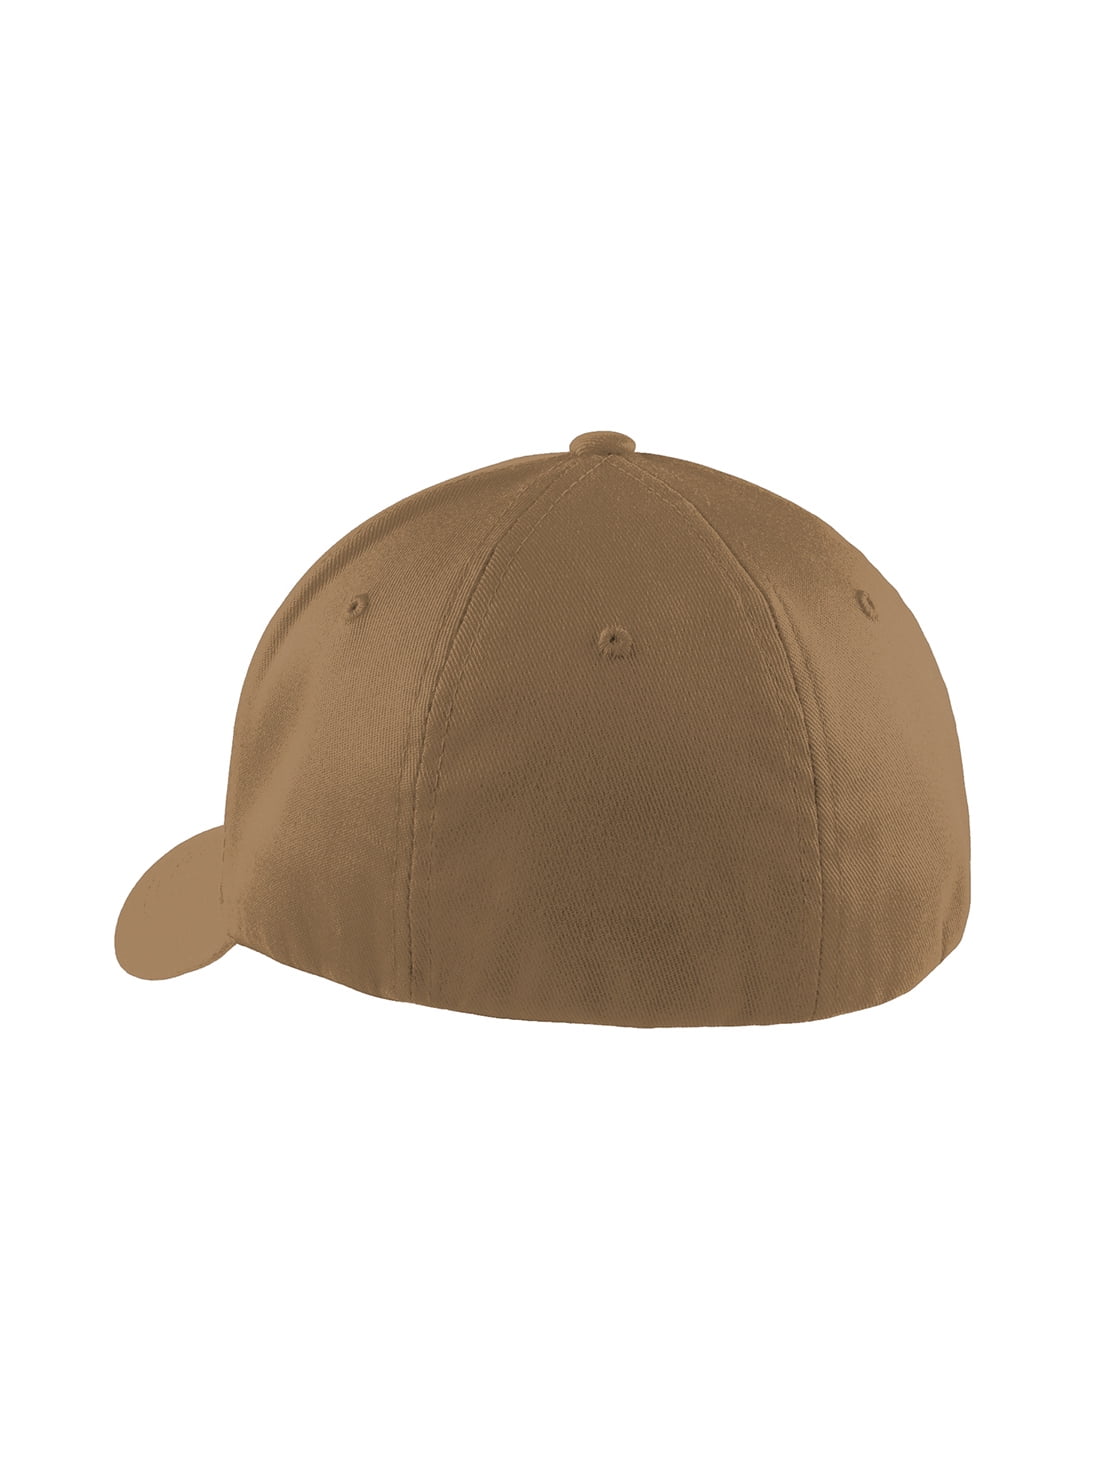 Top Headwear Flex Fit Baseball Cap - Woodland Brown - Large/X-Large